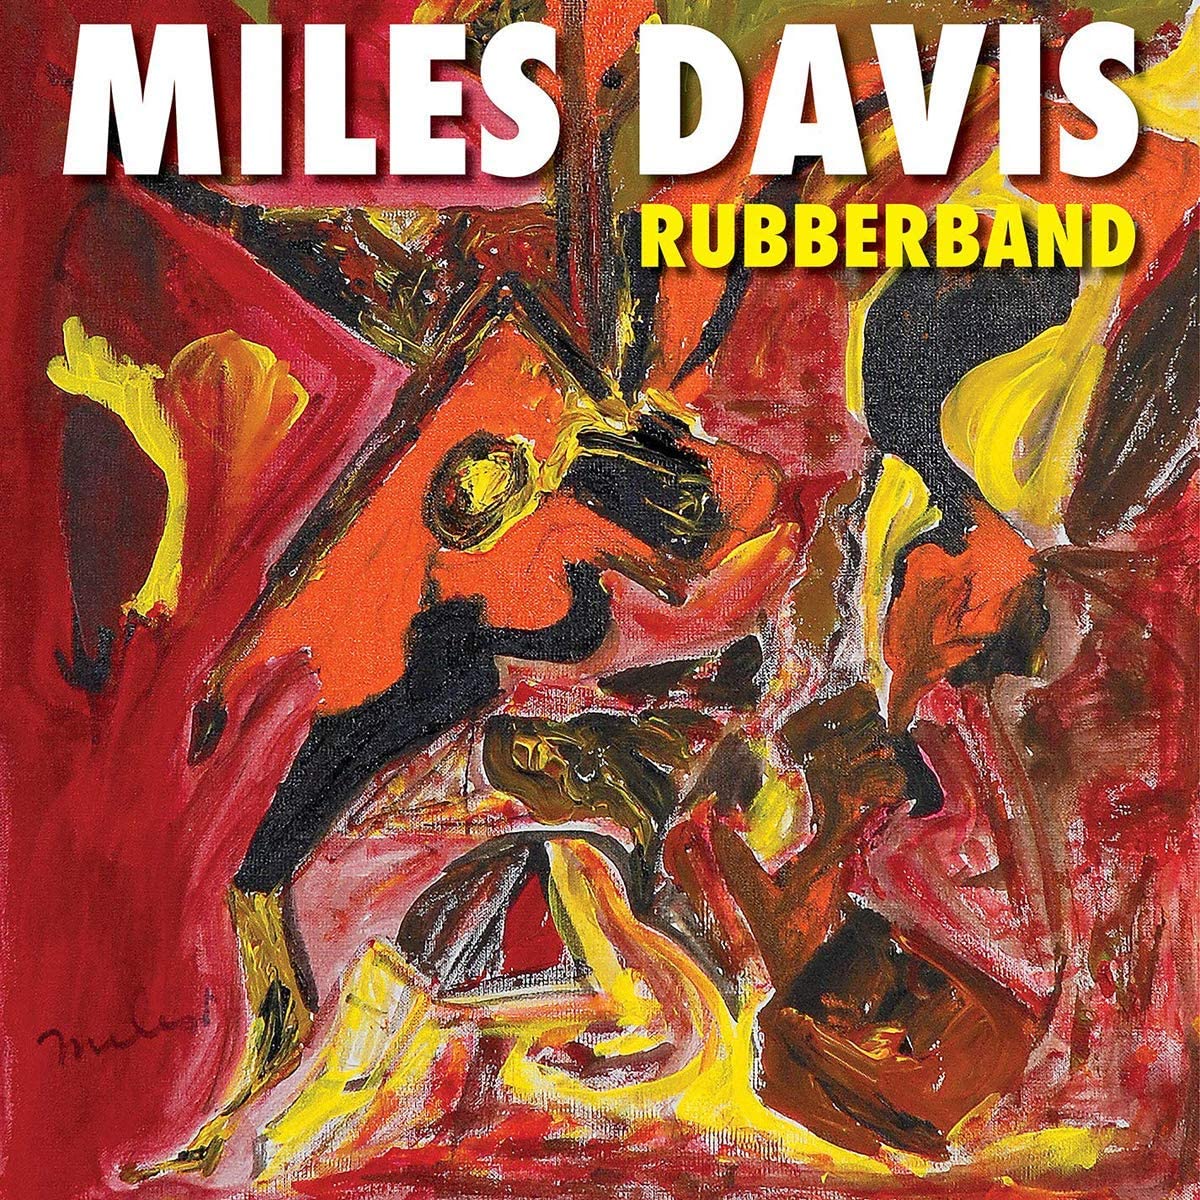 MILES DAVIS - Rubberband - 2LP - 180g Vinyl